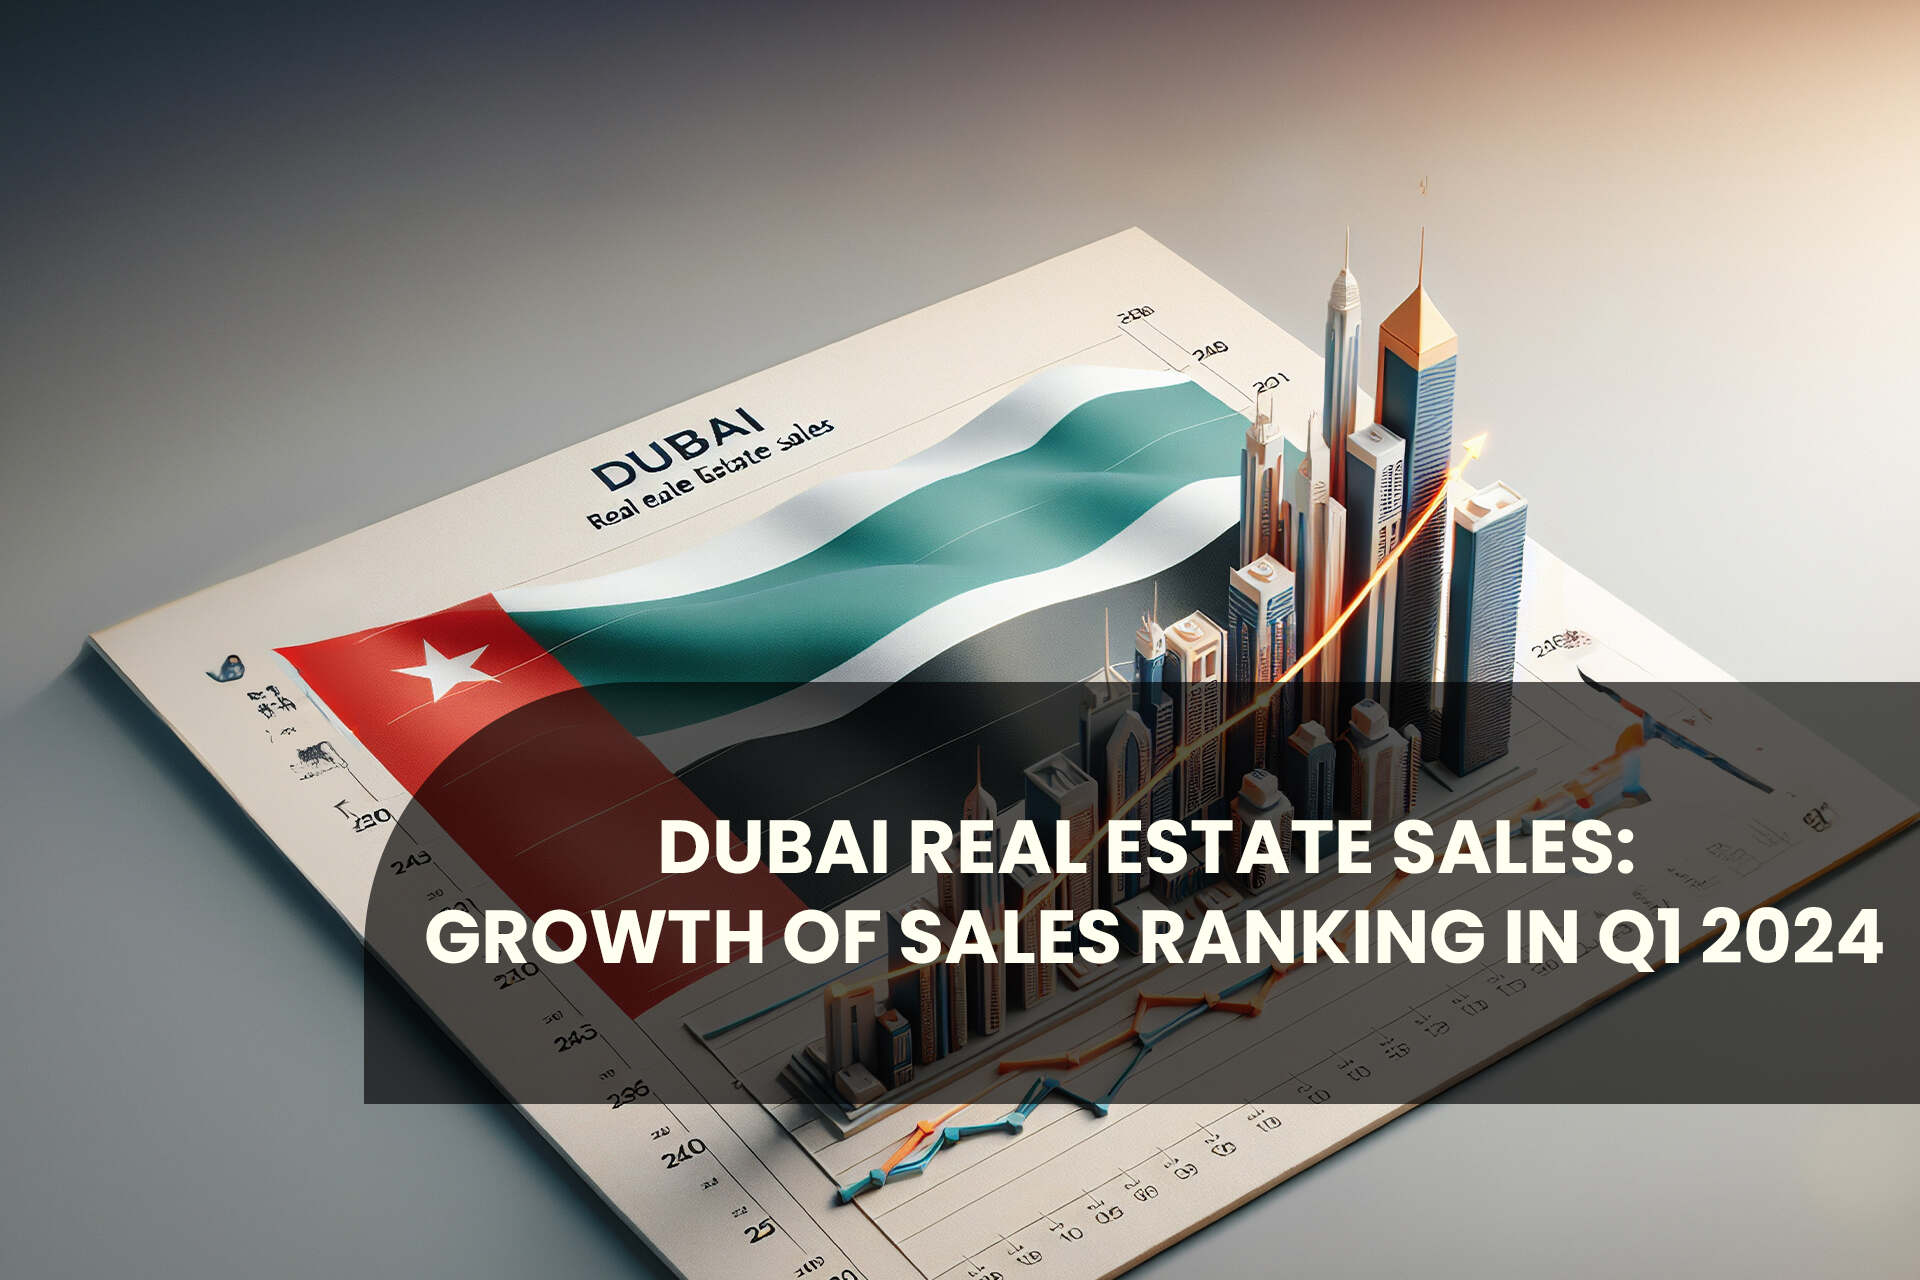 Dubai real estate sales